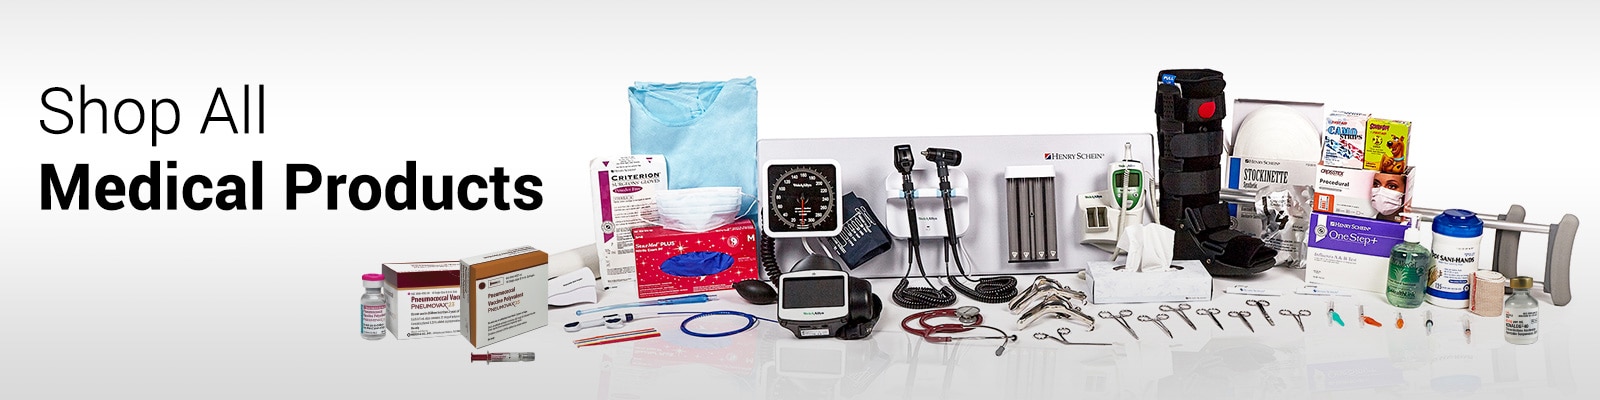 Medical Supplies, Medical Equipment